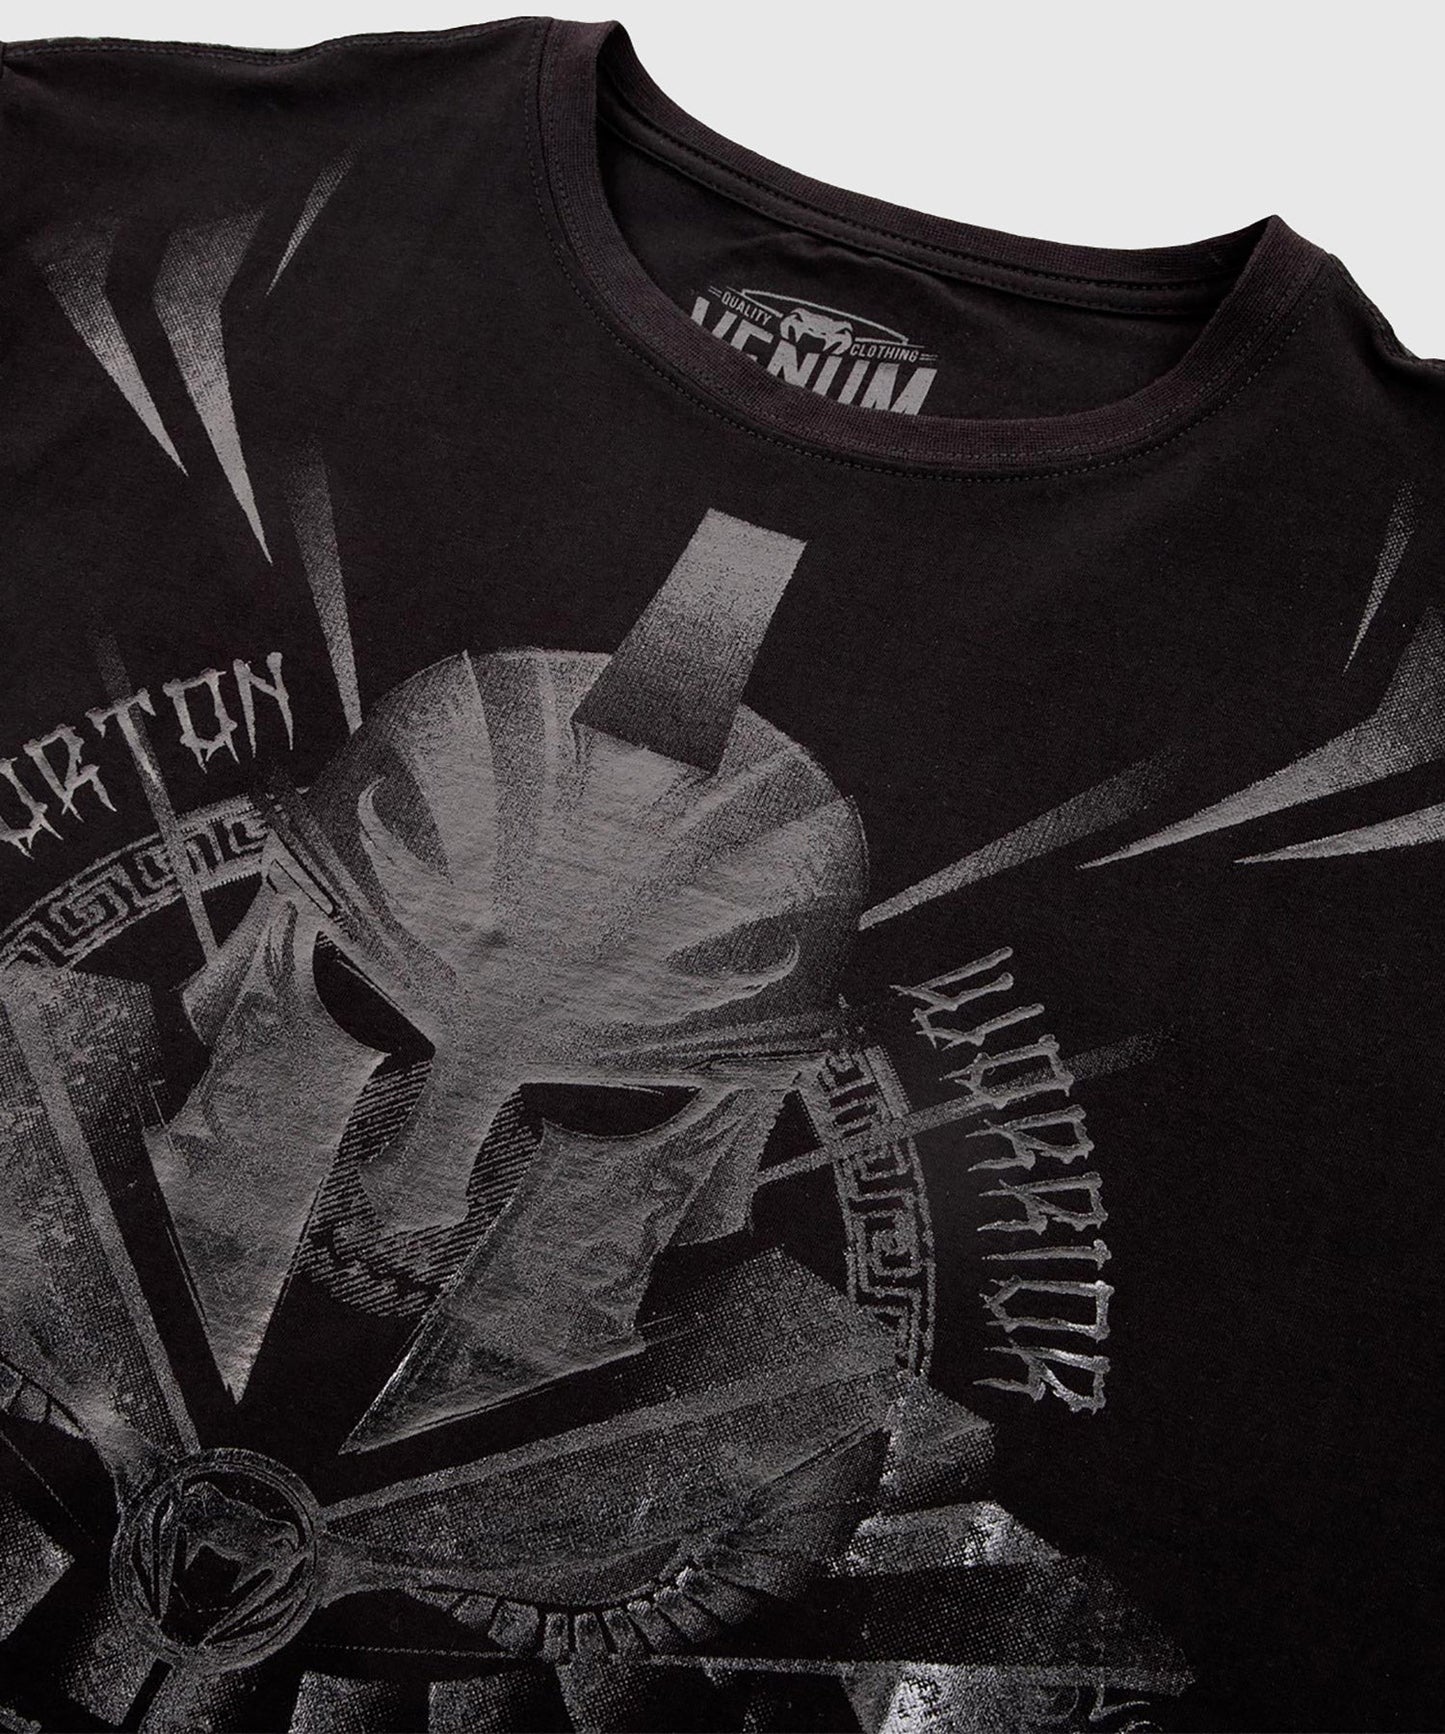 Venum Gladiator 3.0 T-shirt - Black/Black